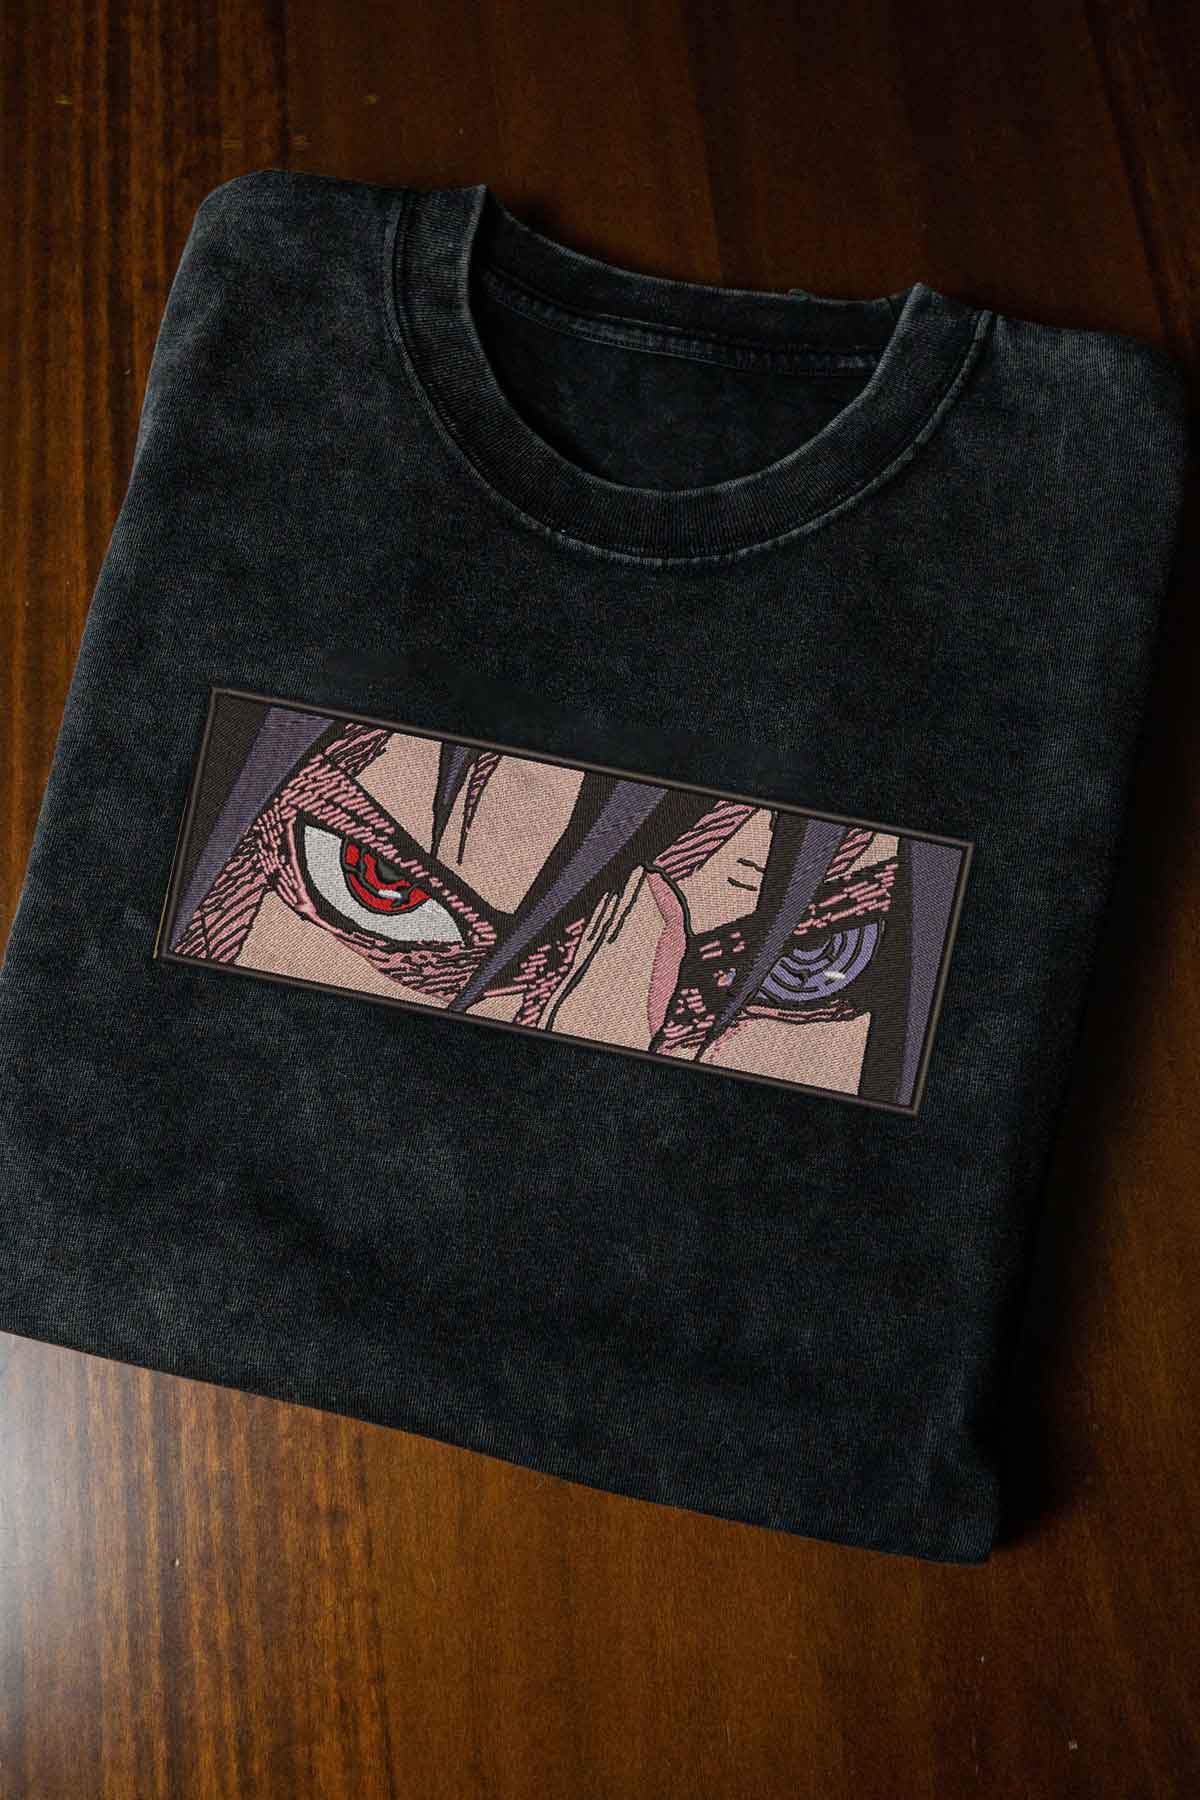 Anime Embroidery Naruto Sasuke Eye Combo - A.G.E Store